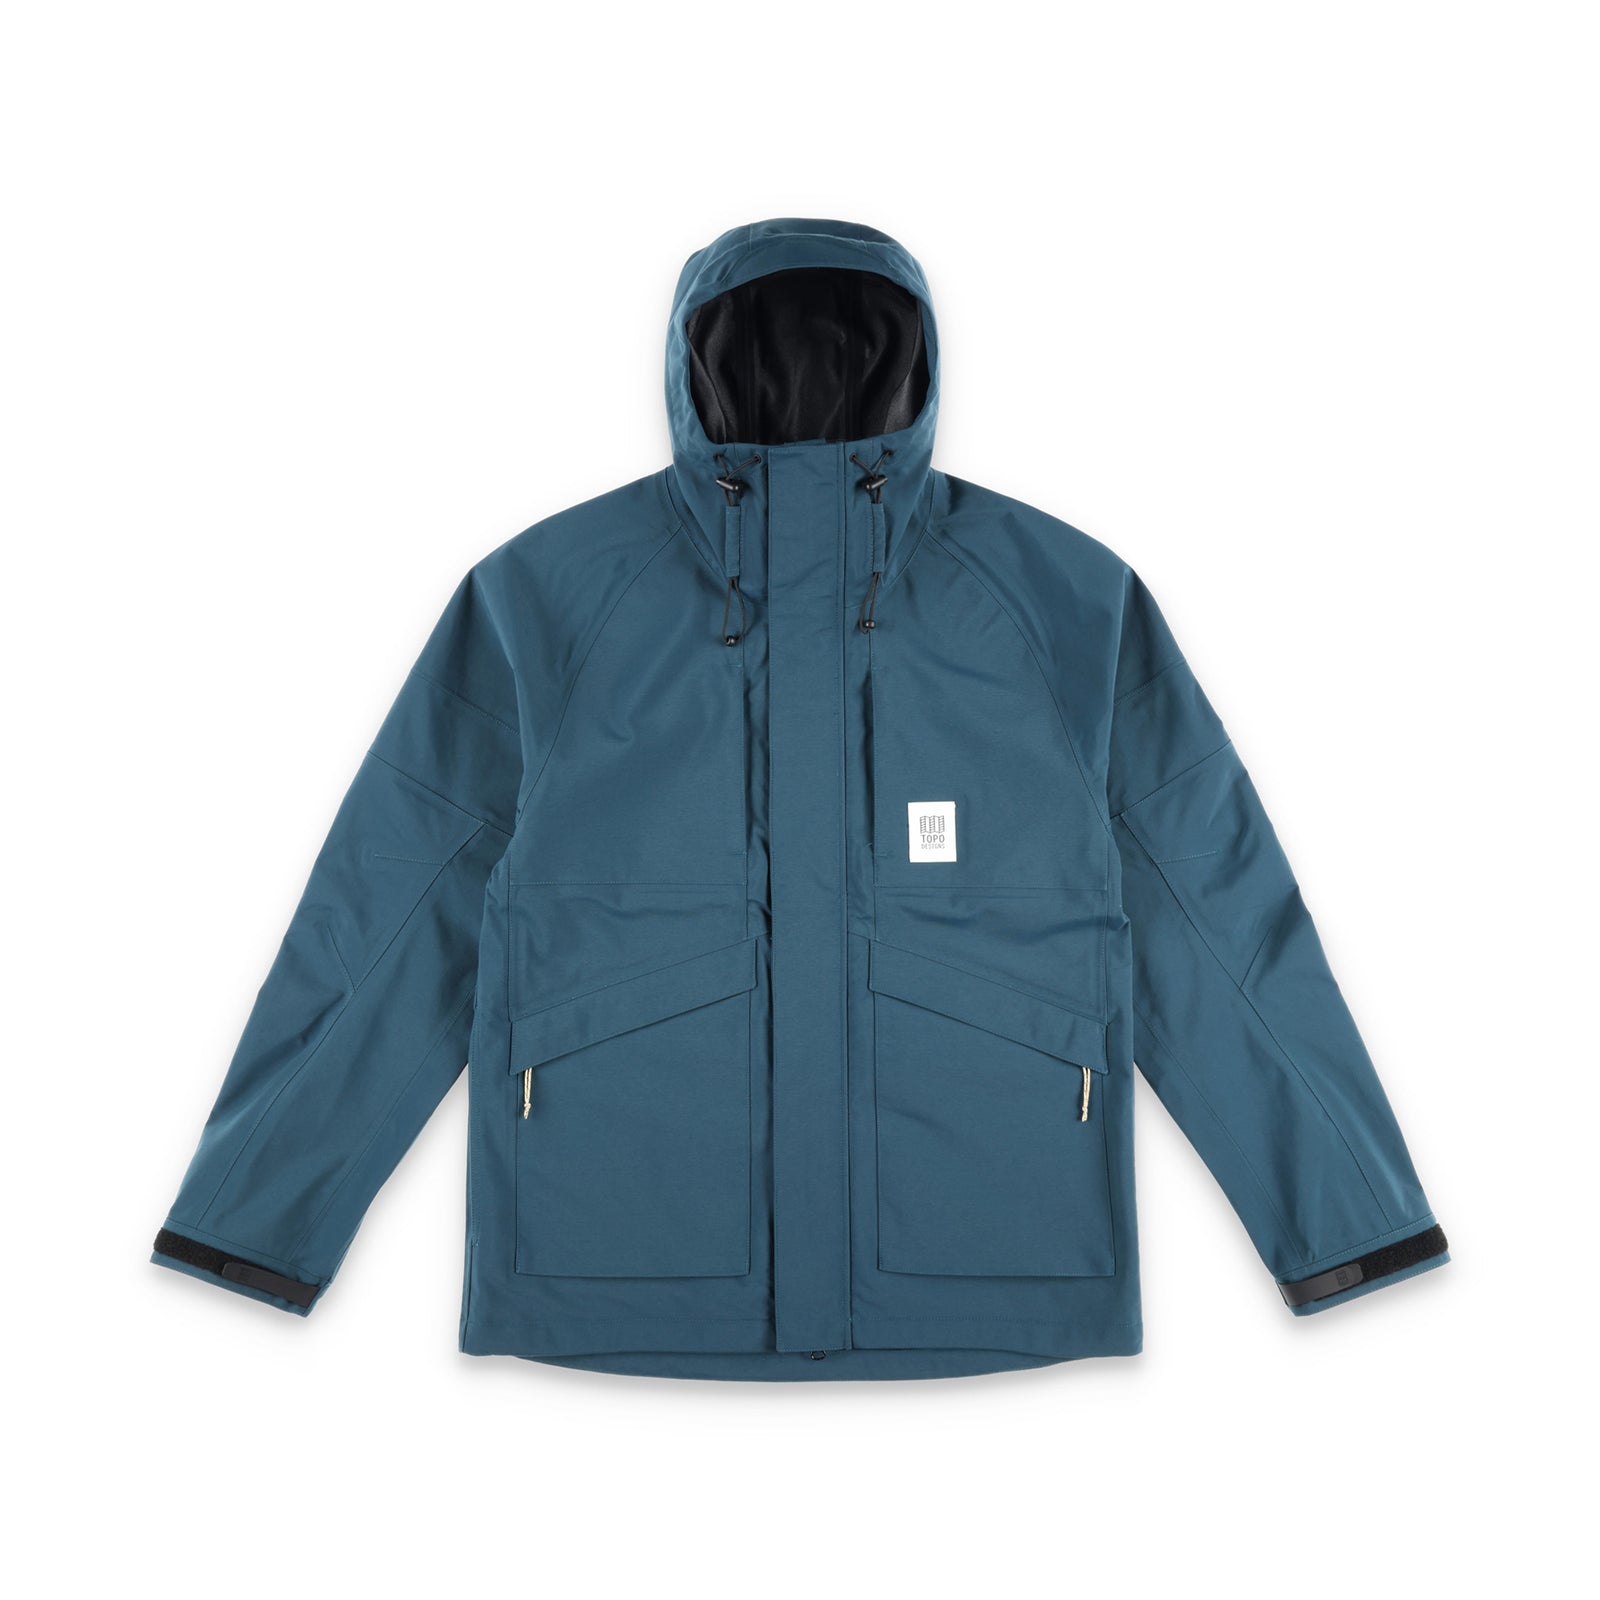 Topo Designs Men's Mountain Parka waterproof shell jacket in "Pond Blue"